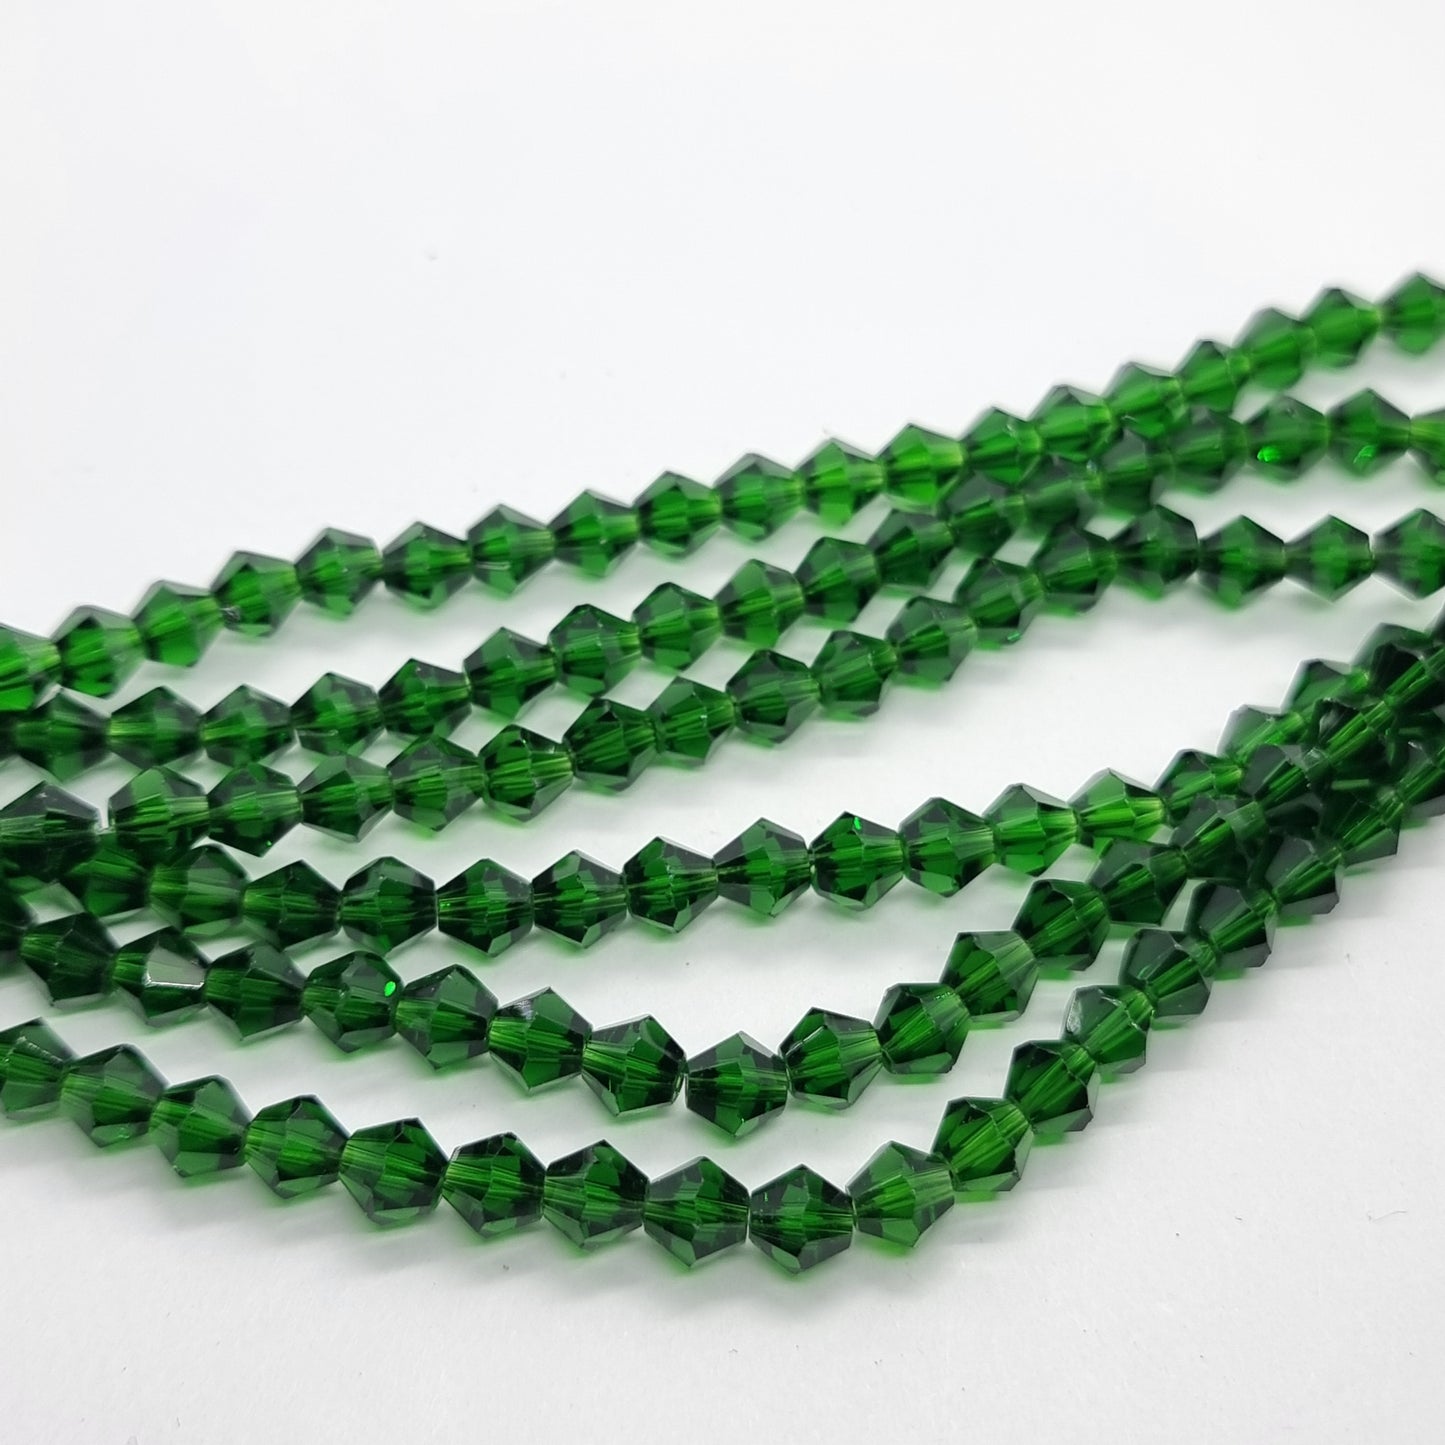 6mm Emerald Green Glass Bicones